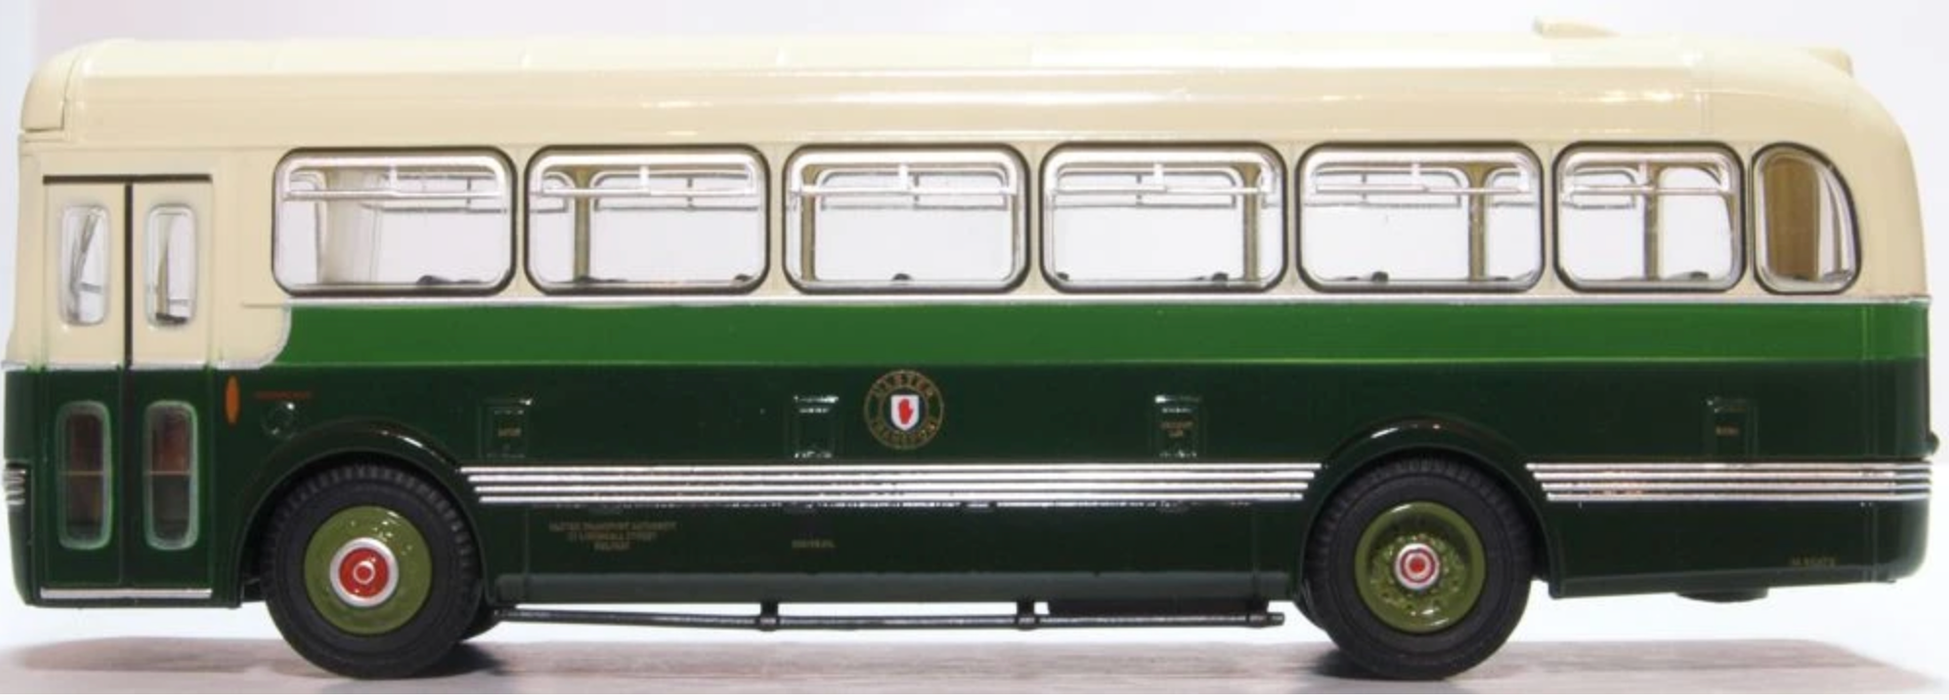 Saro Bus Ulster Transport Authority